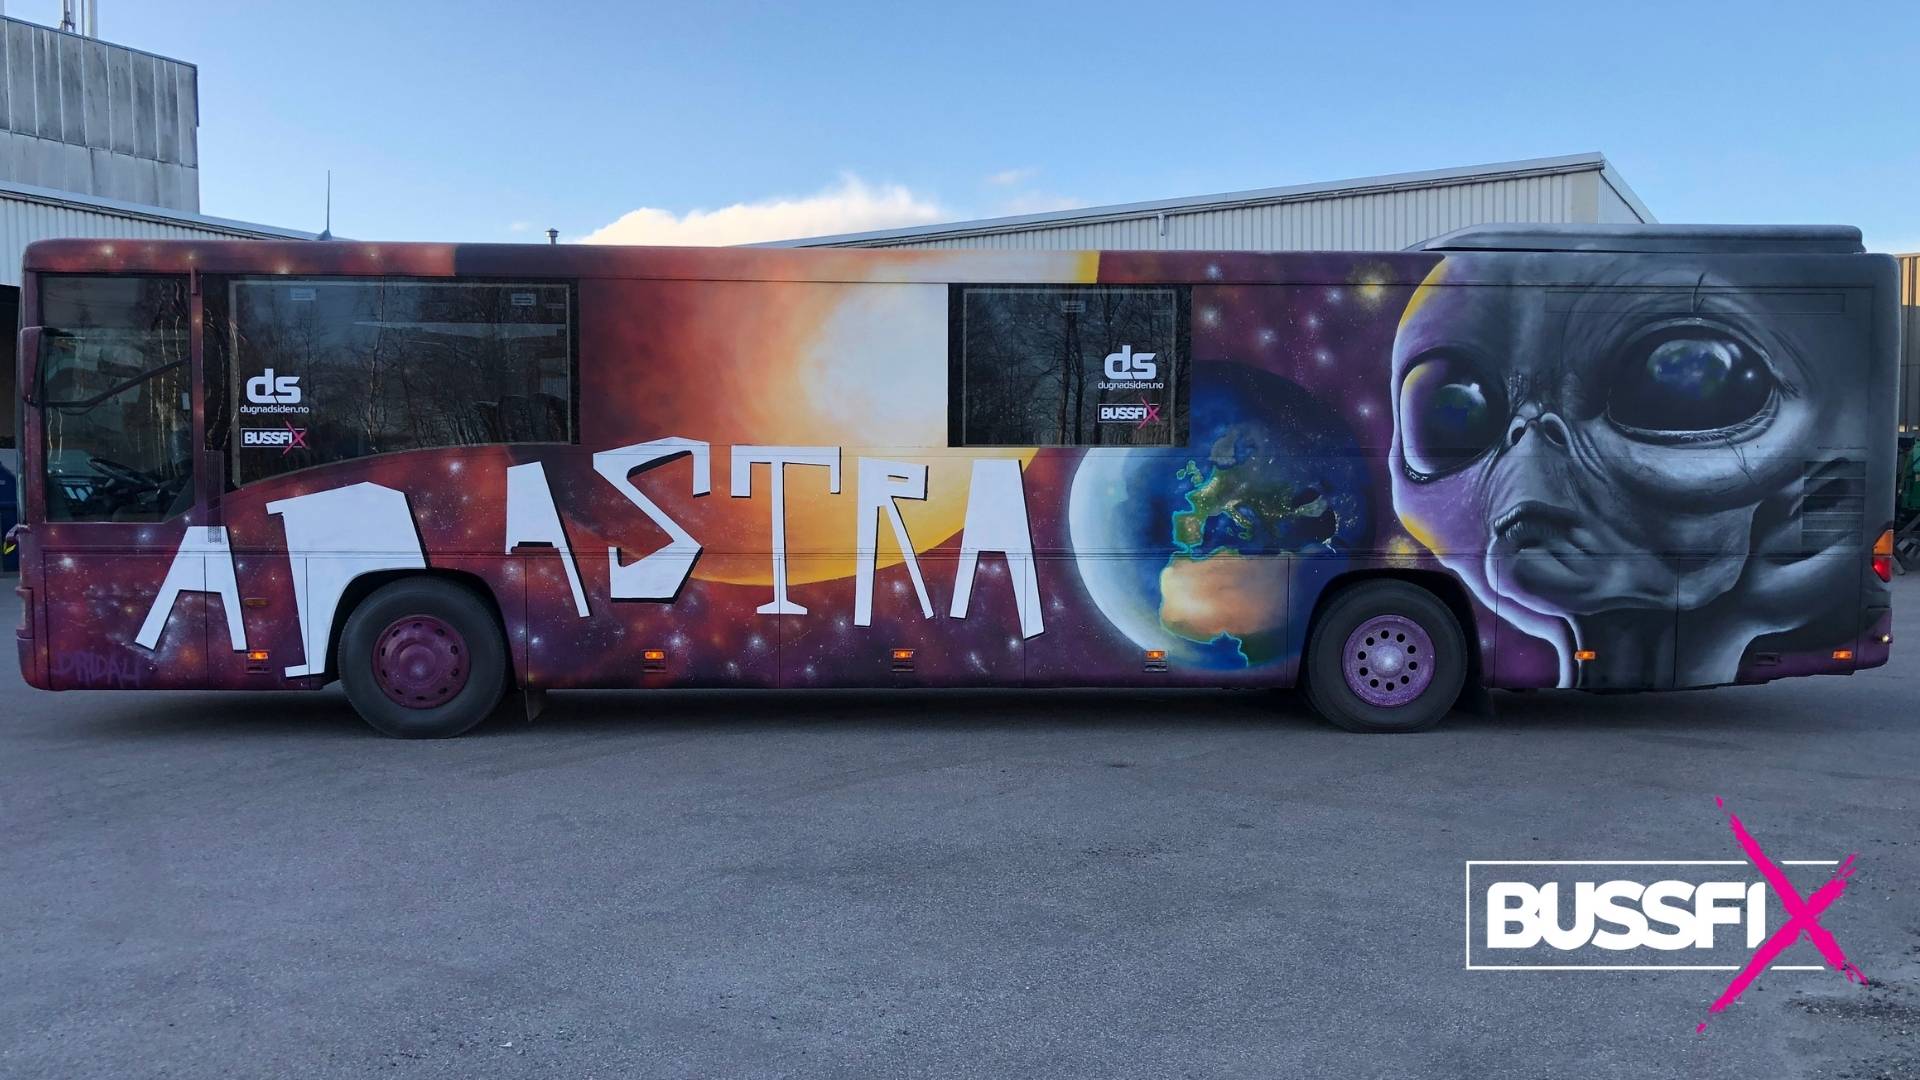 Graffiti kjøpe russebuss ad astra 2020